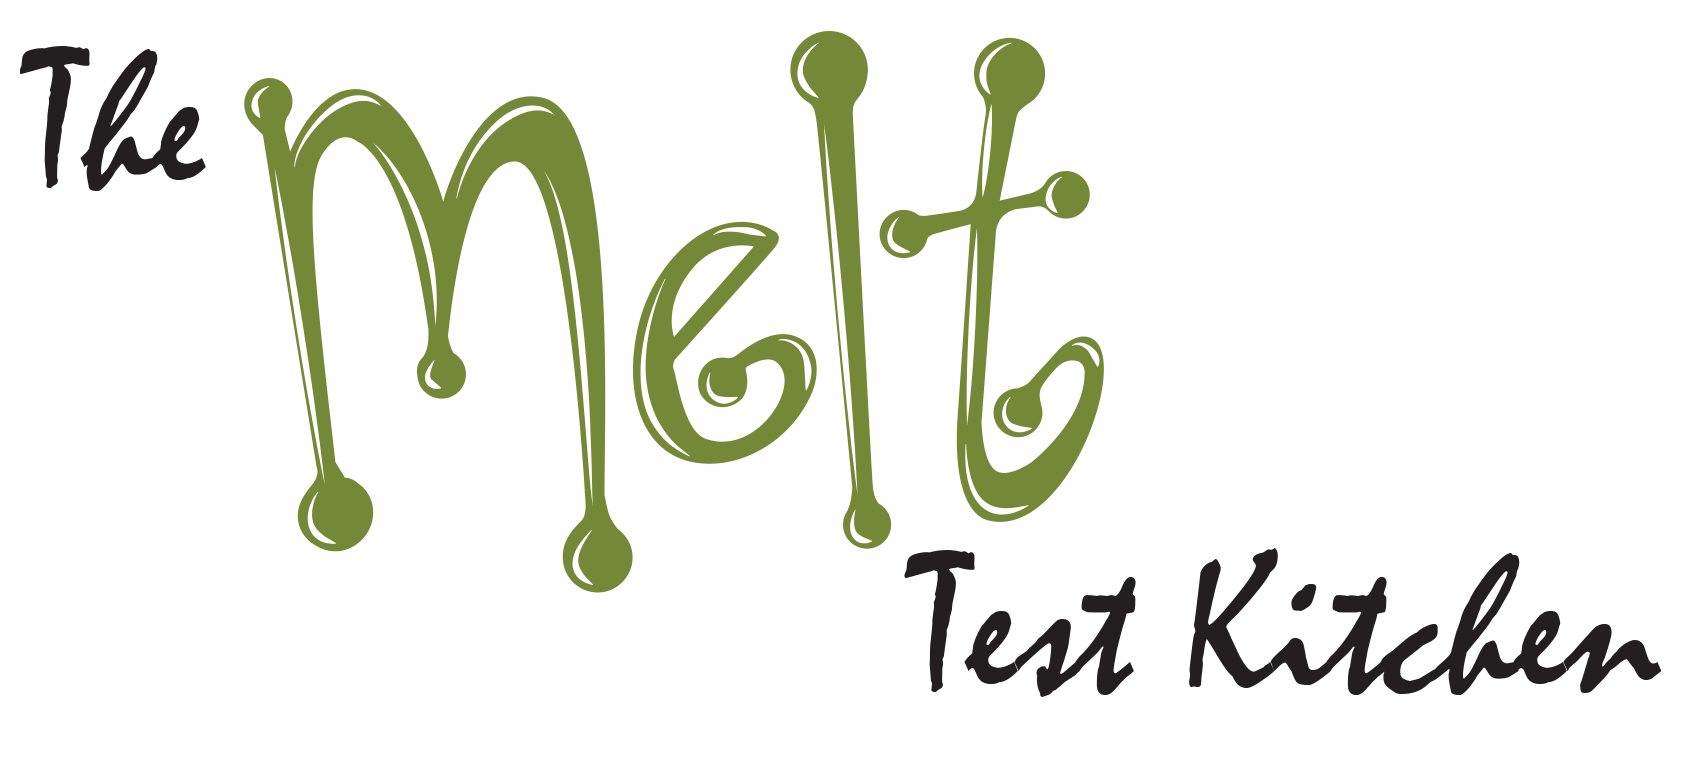 The Melt Test Kitchen Logo